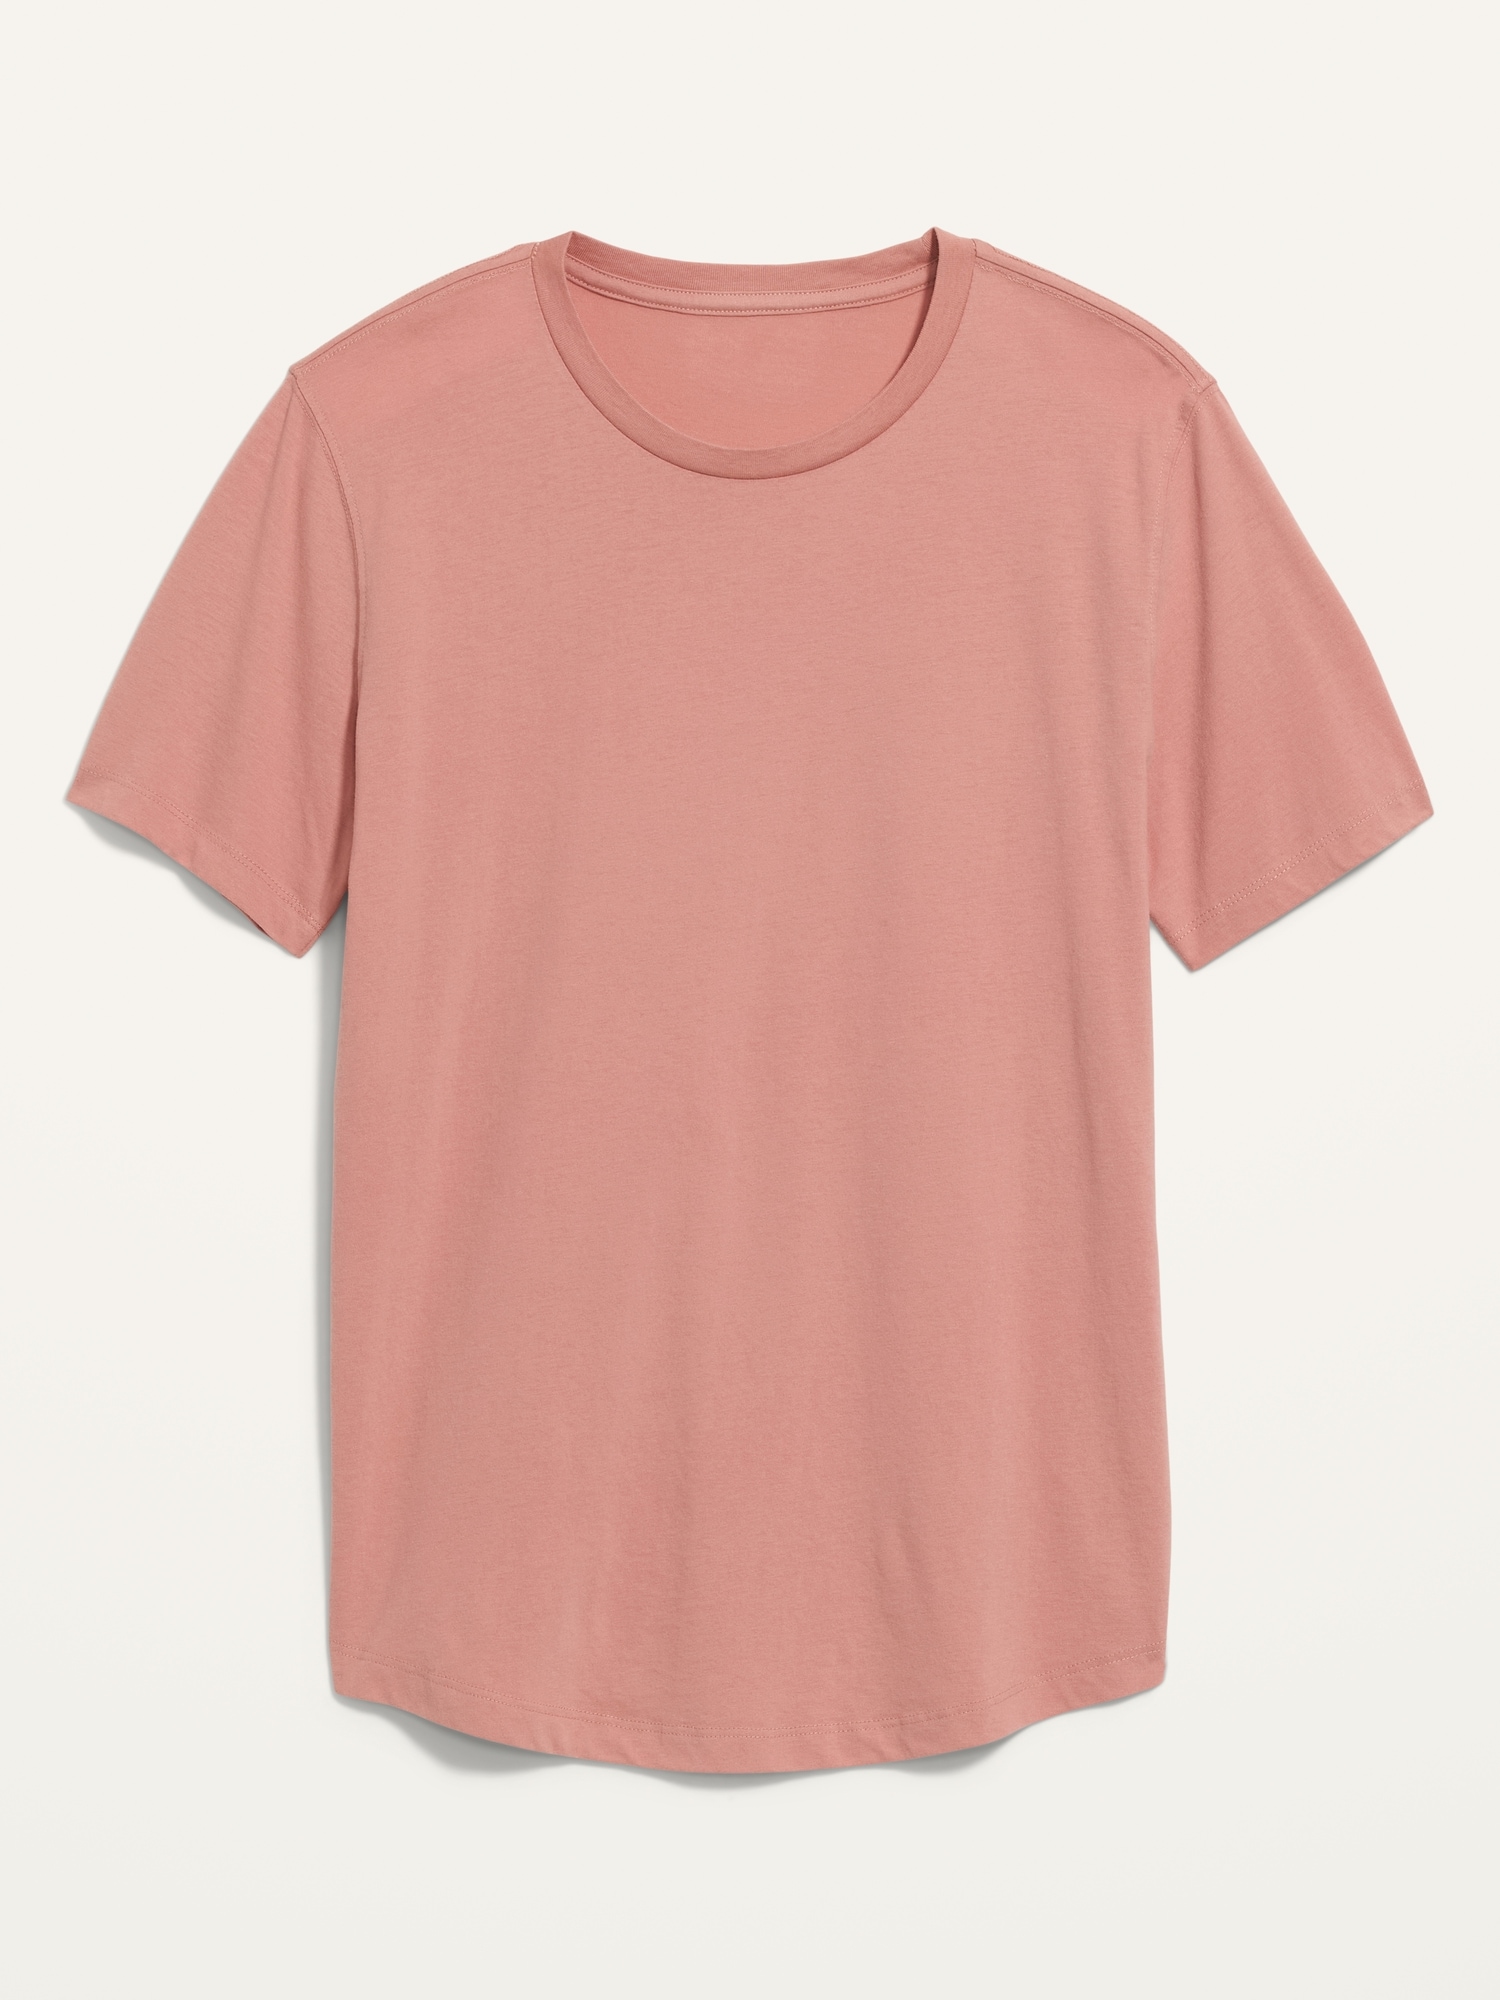 Pink Crew Shirt, Men's Curved Hem T-Shirt